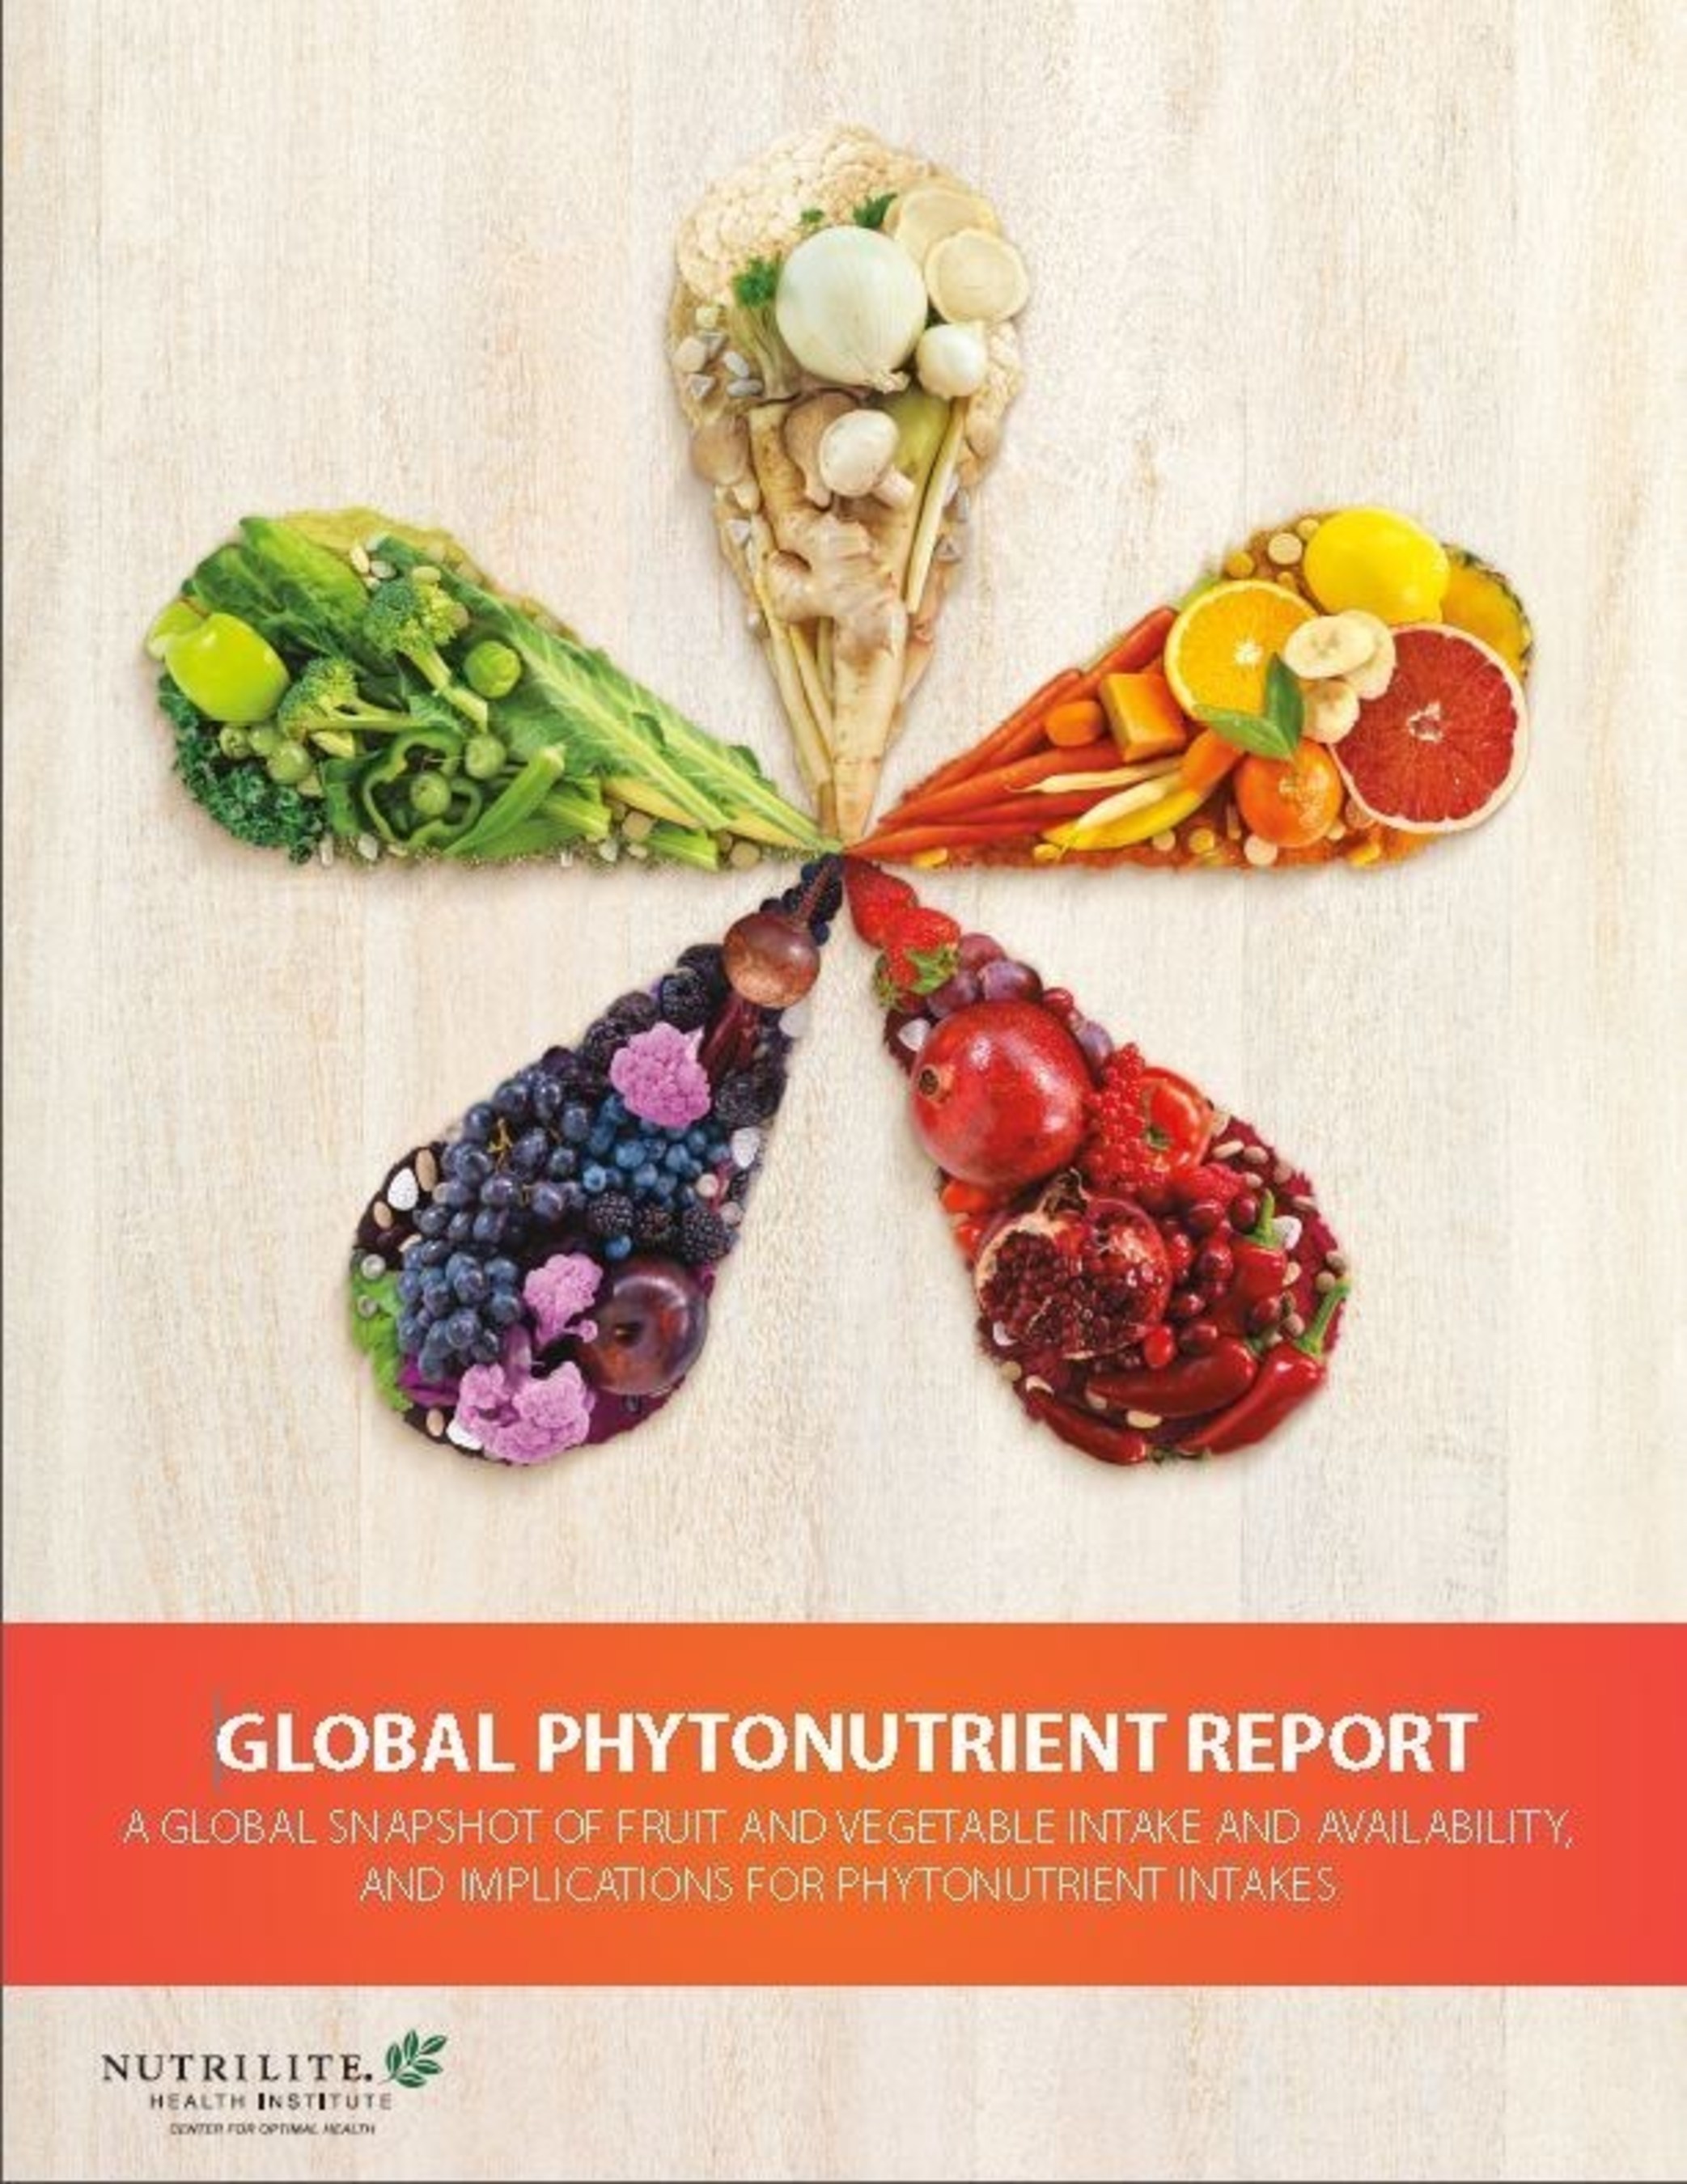 New Global Phytonutrient Report from Nutrilite Health Institute (PRNewsFoto/Amway) (PRNewsFoto/Amway)